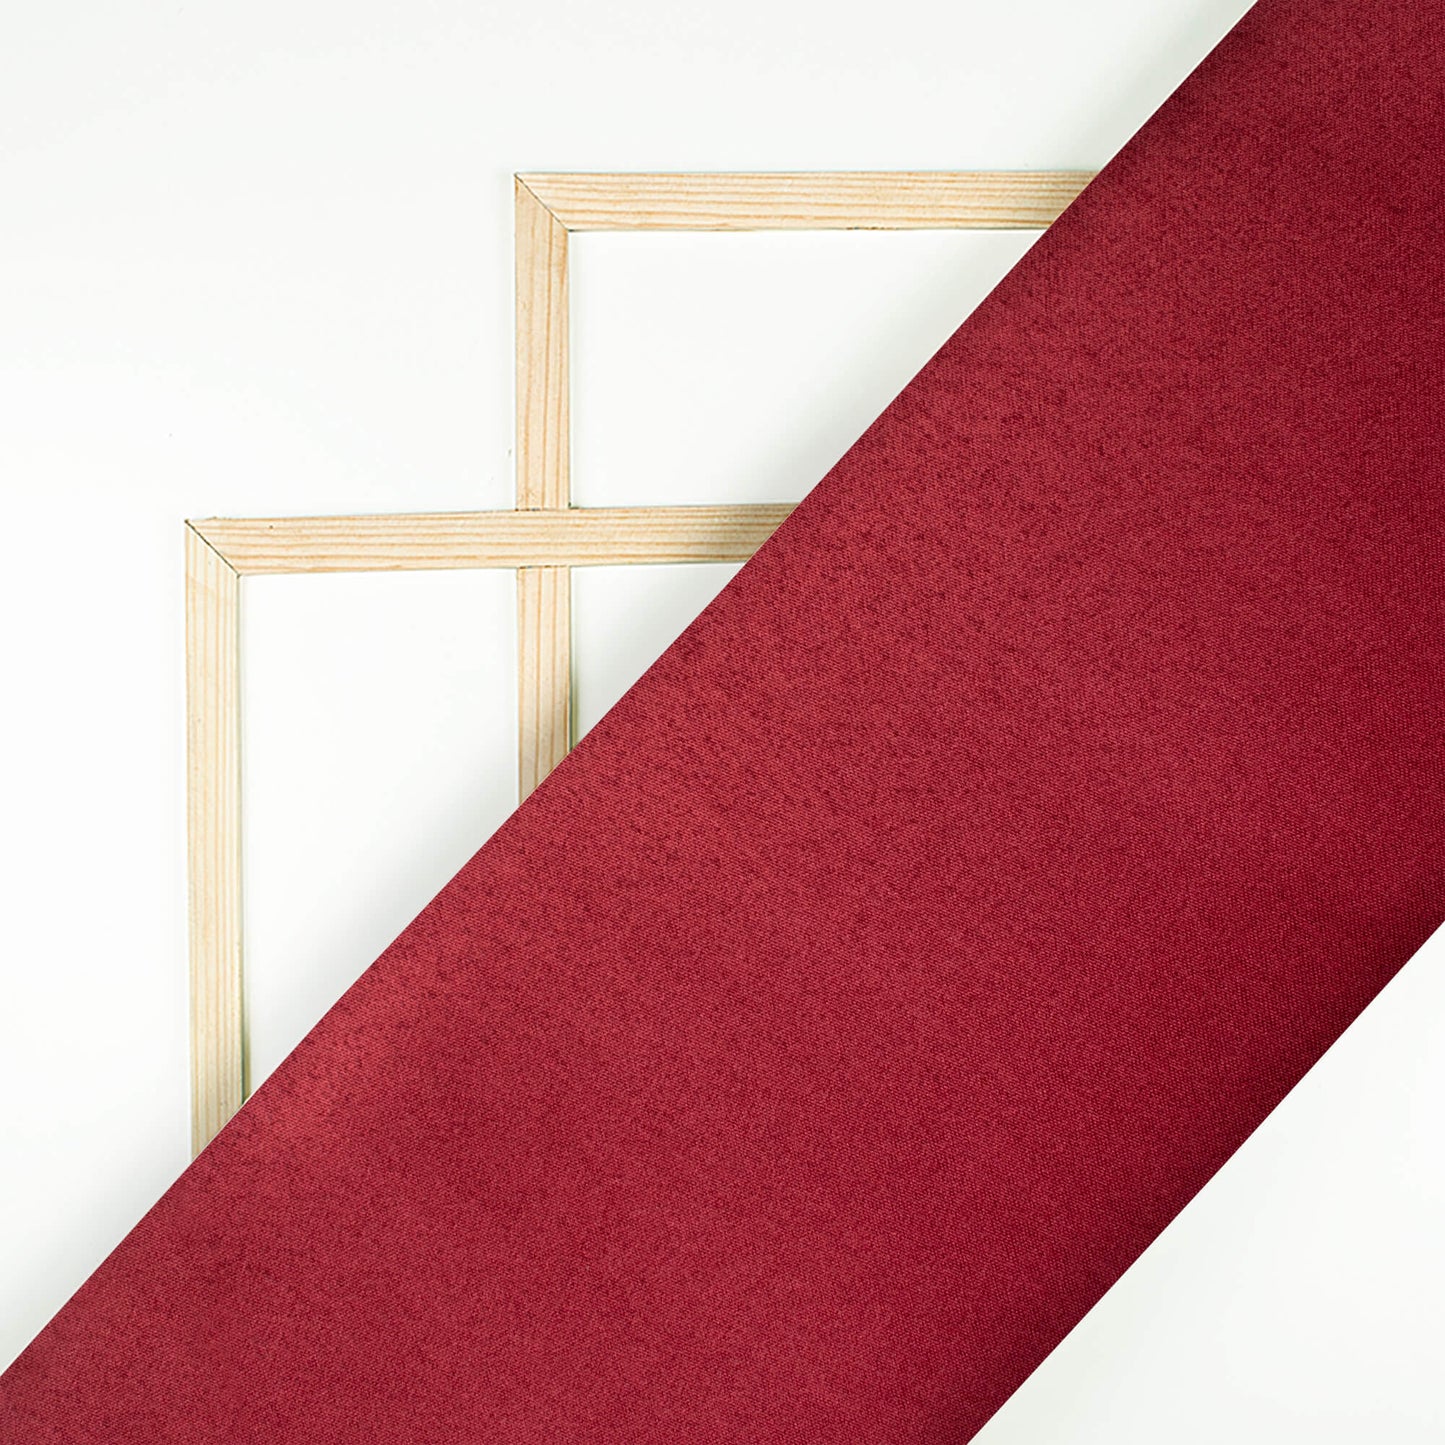 Maroon Plain Charmeous Satin Fabric (Width 58 Inches)